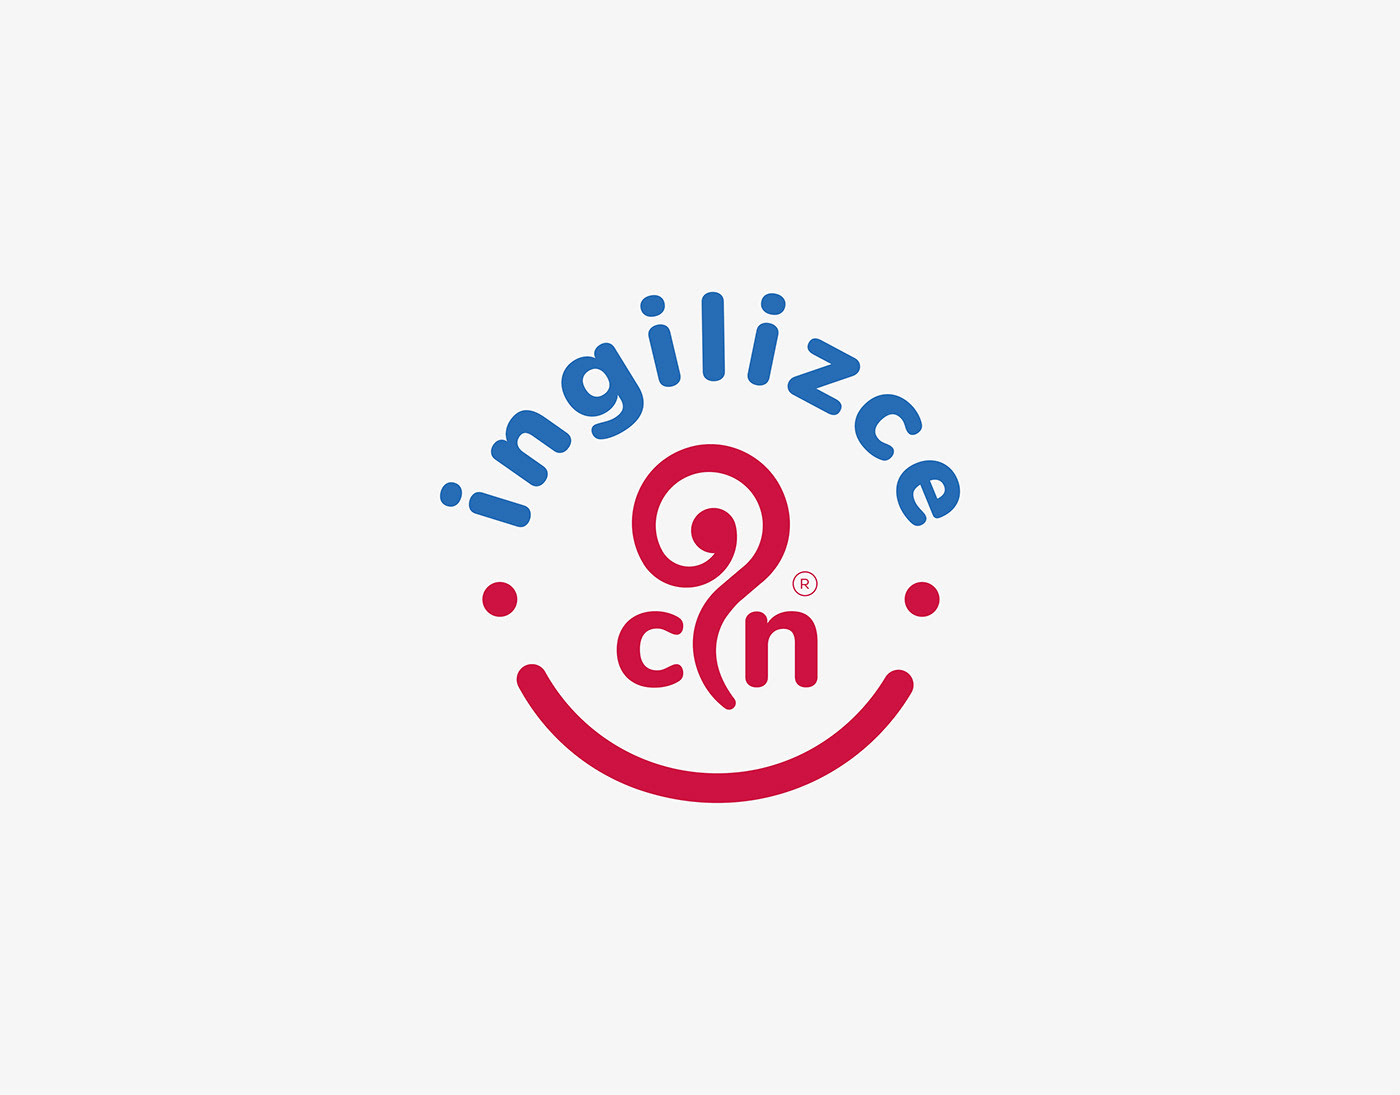 branding  designer logo logofolio